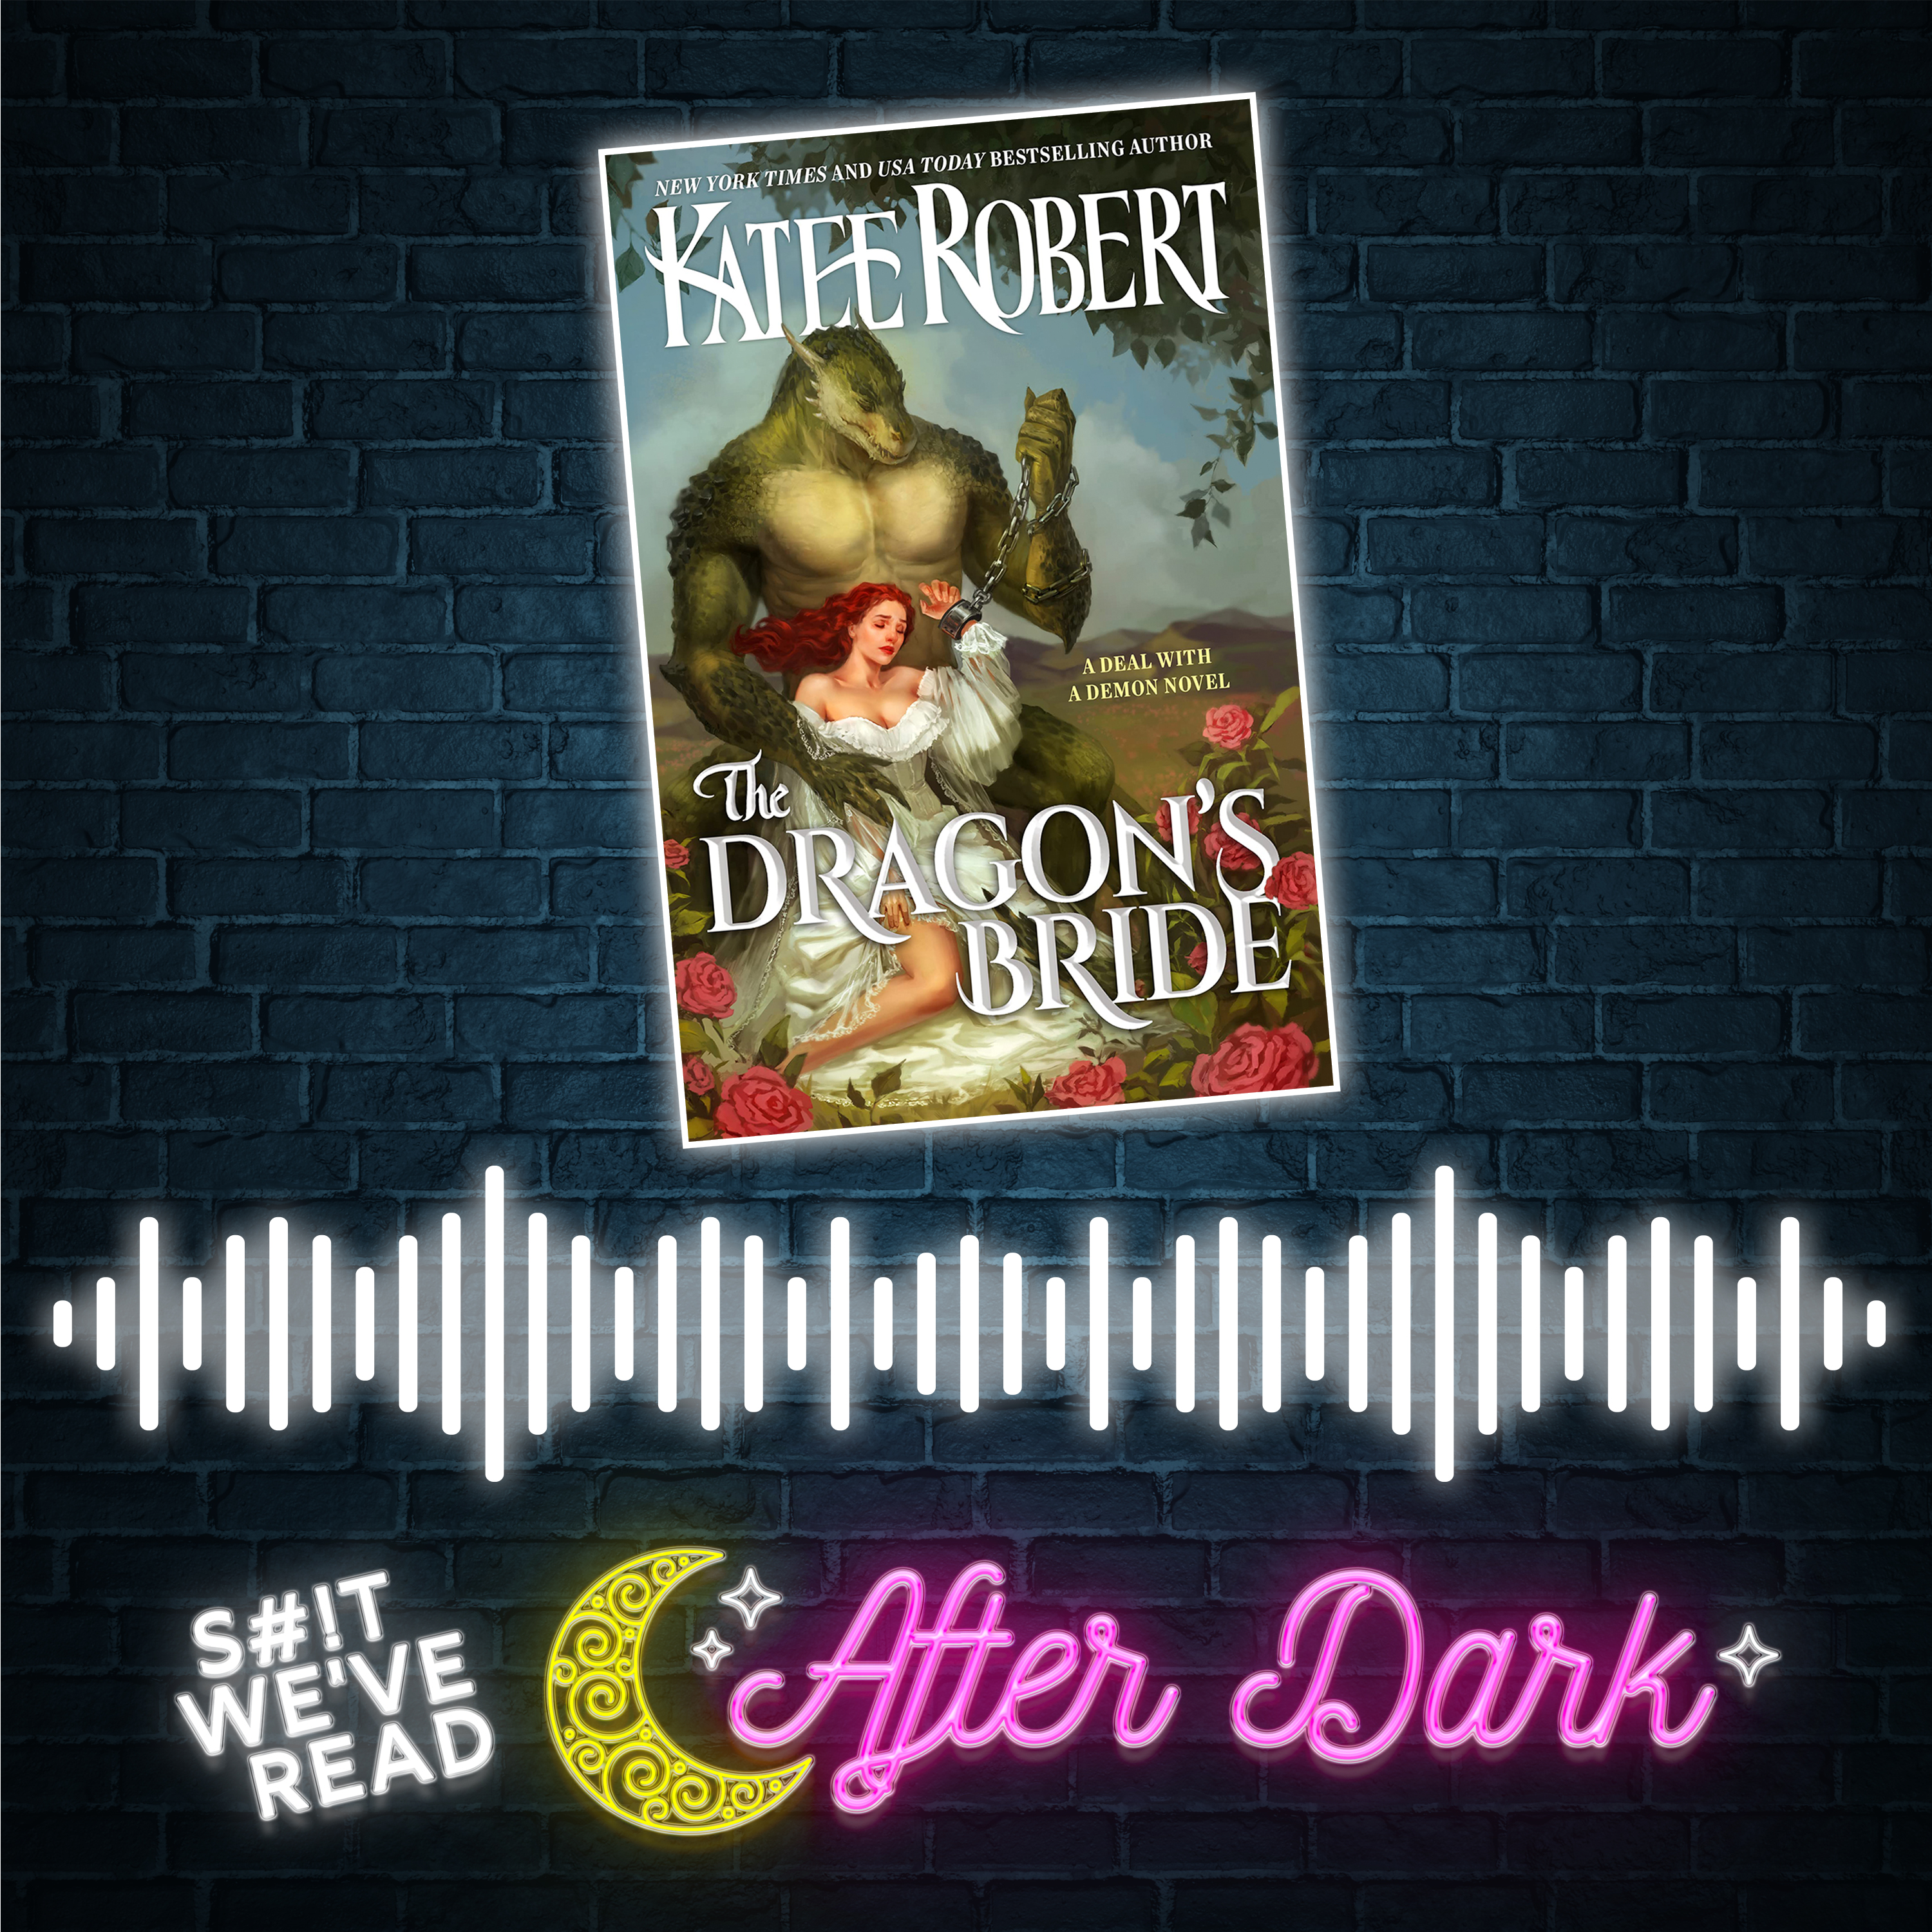 After Dark: The Dragon's Bride